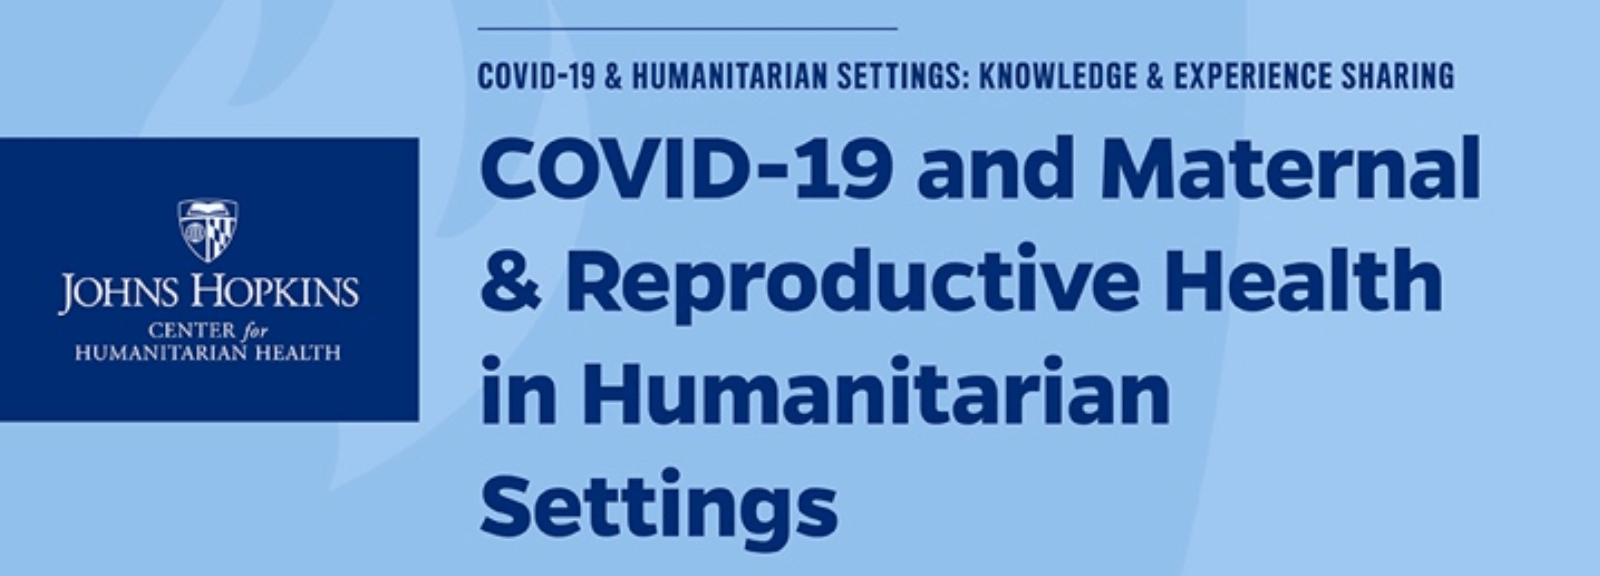 COVID-19 and Maternal & Reproductive Health in Humanitarian Settings